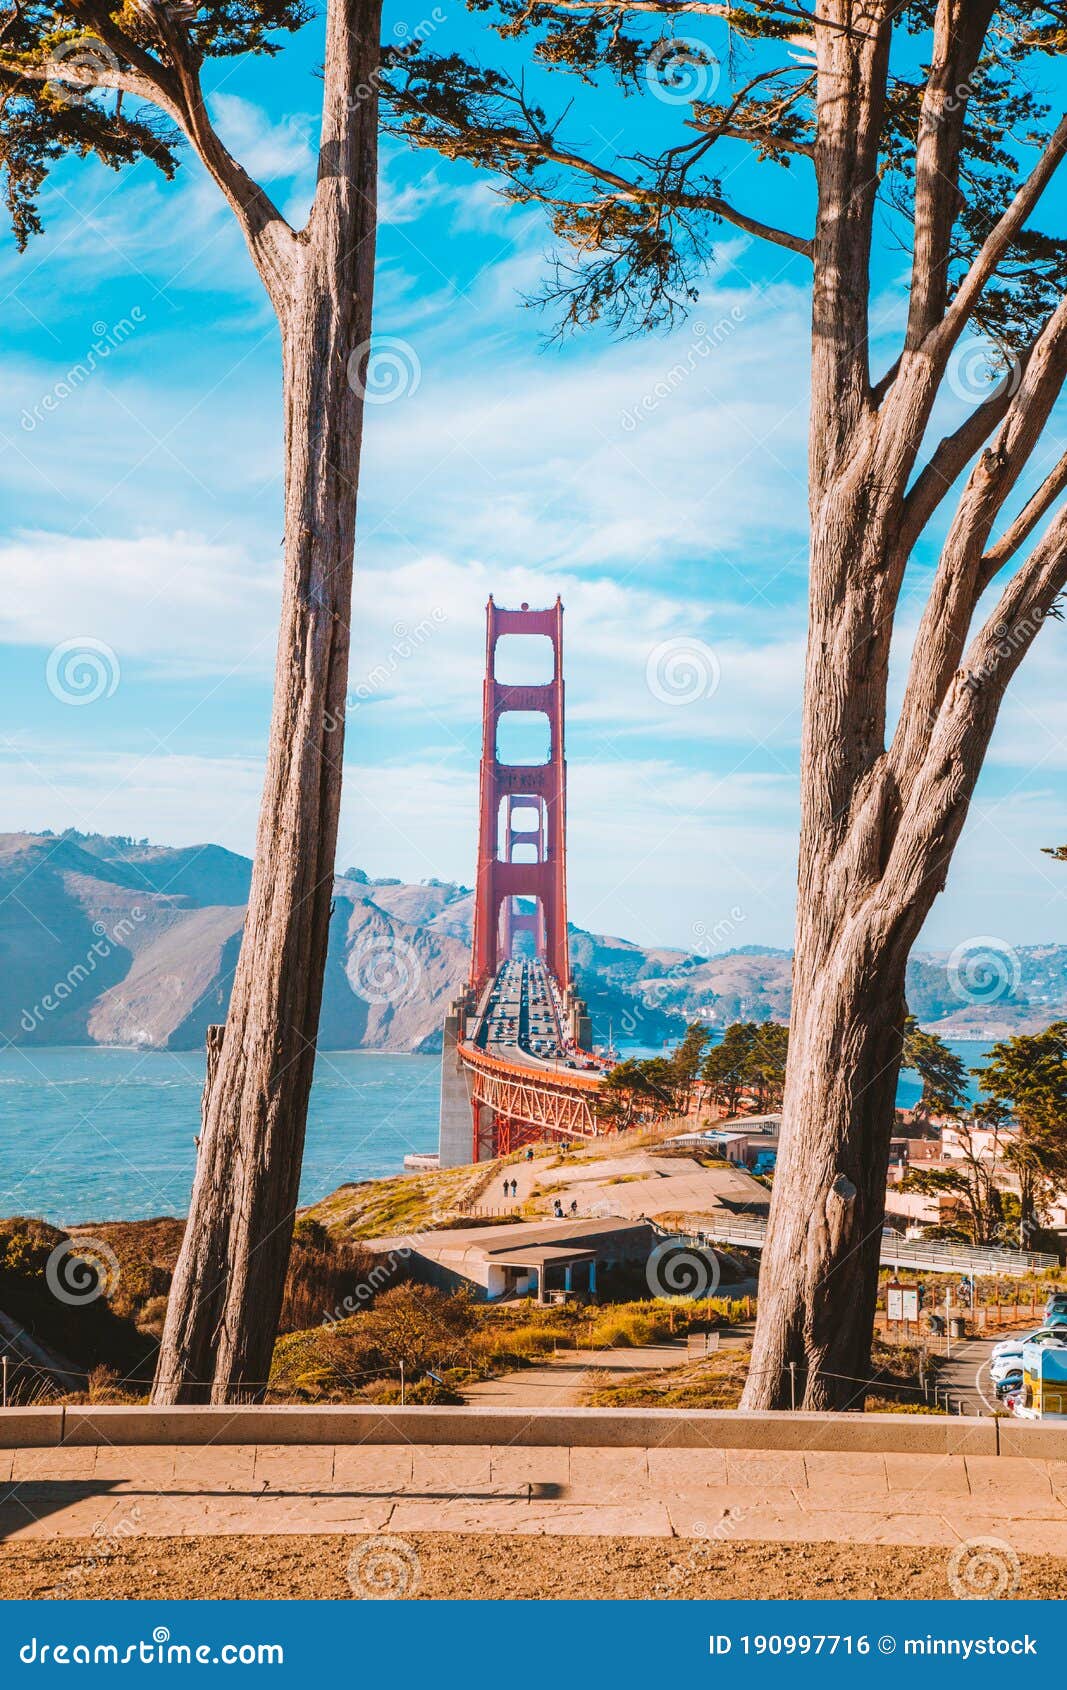 golden gate bridge with cypress trees at presidio park, san francisco, california, usa